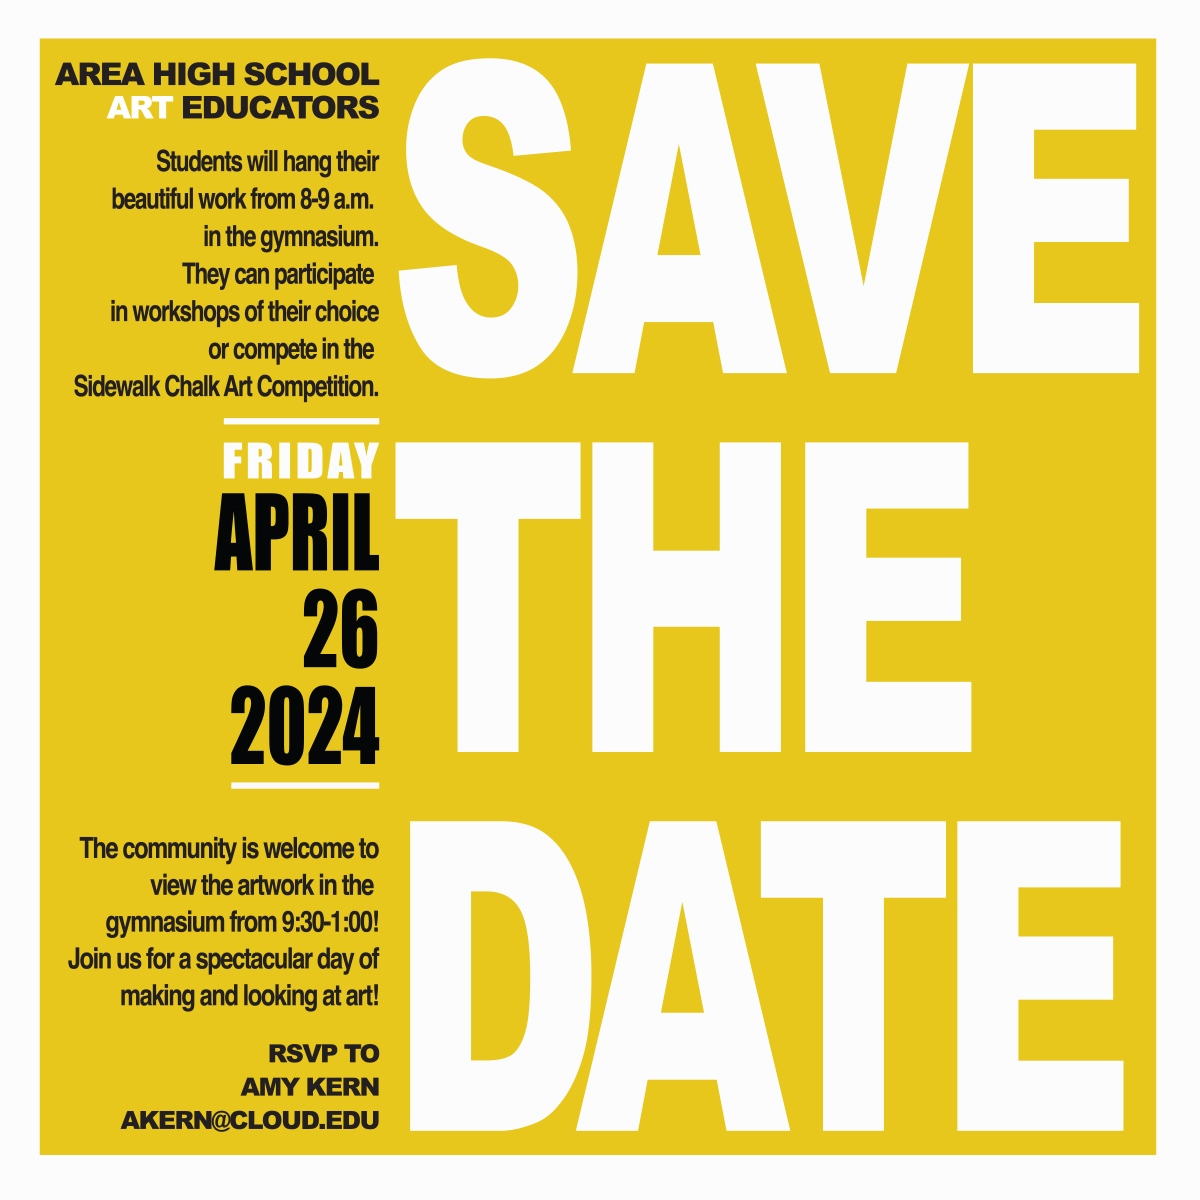 The 2024 Art Show is April 26.